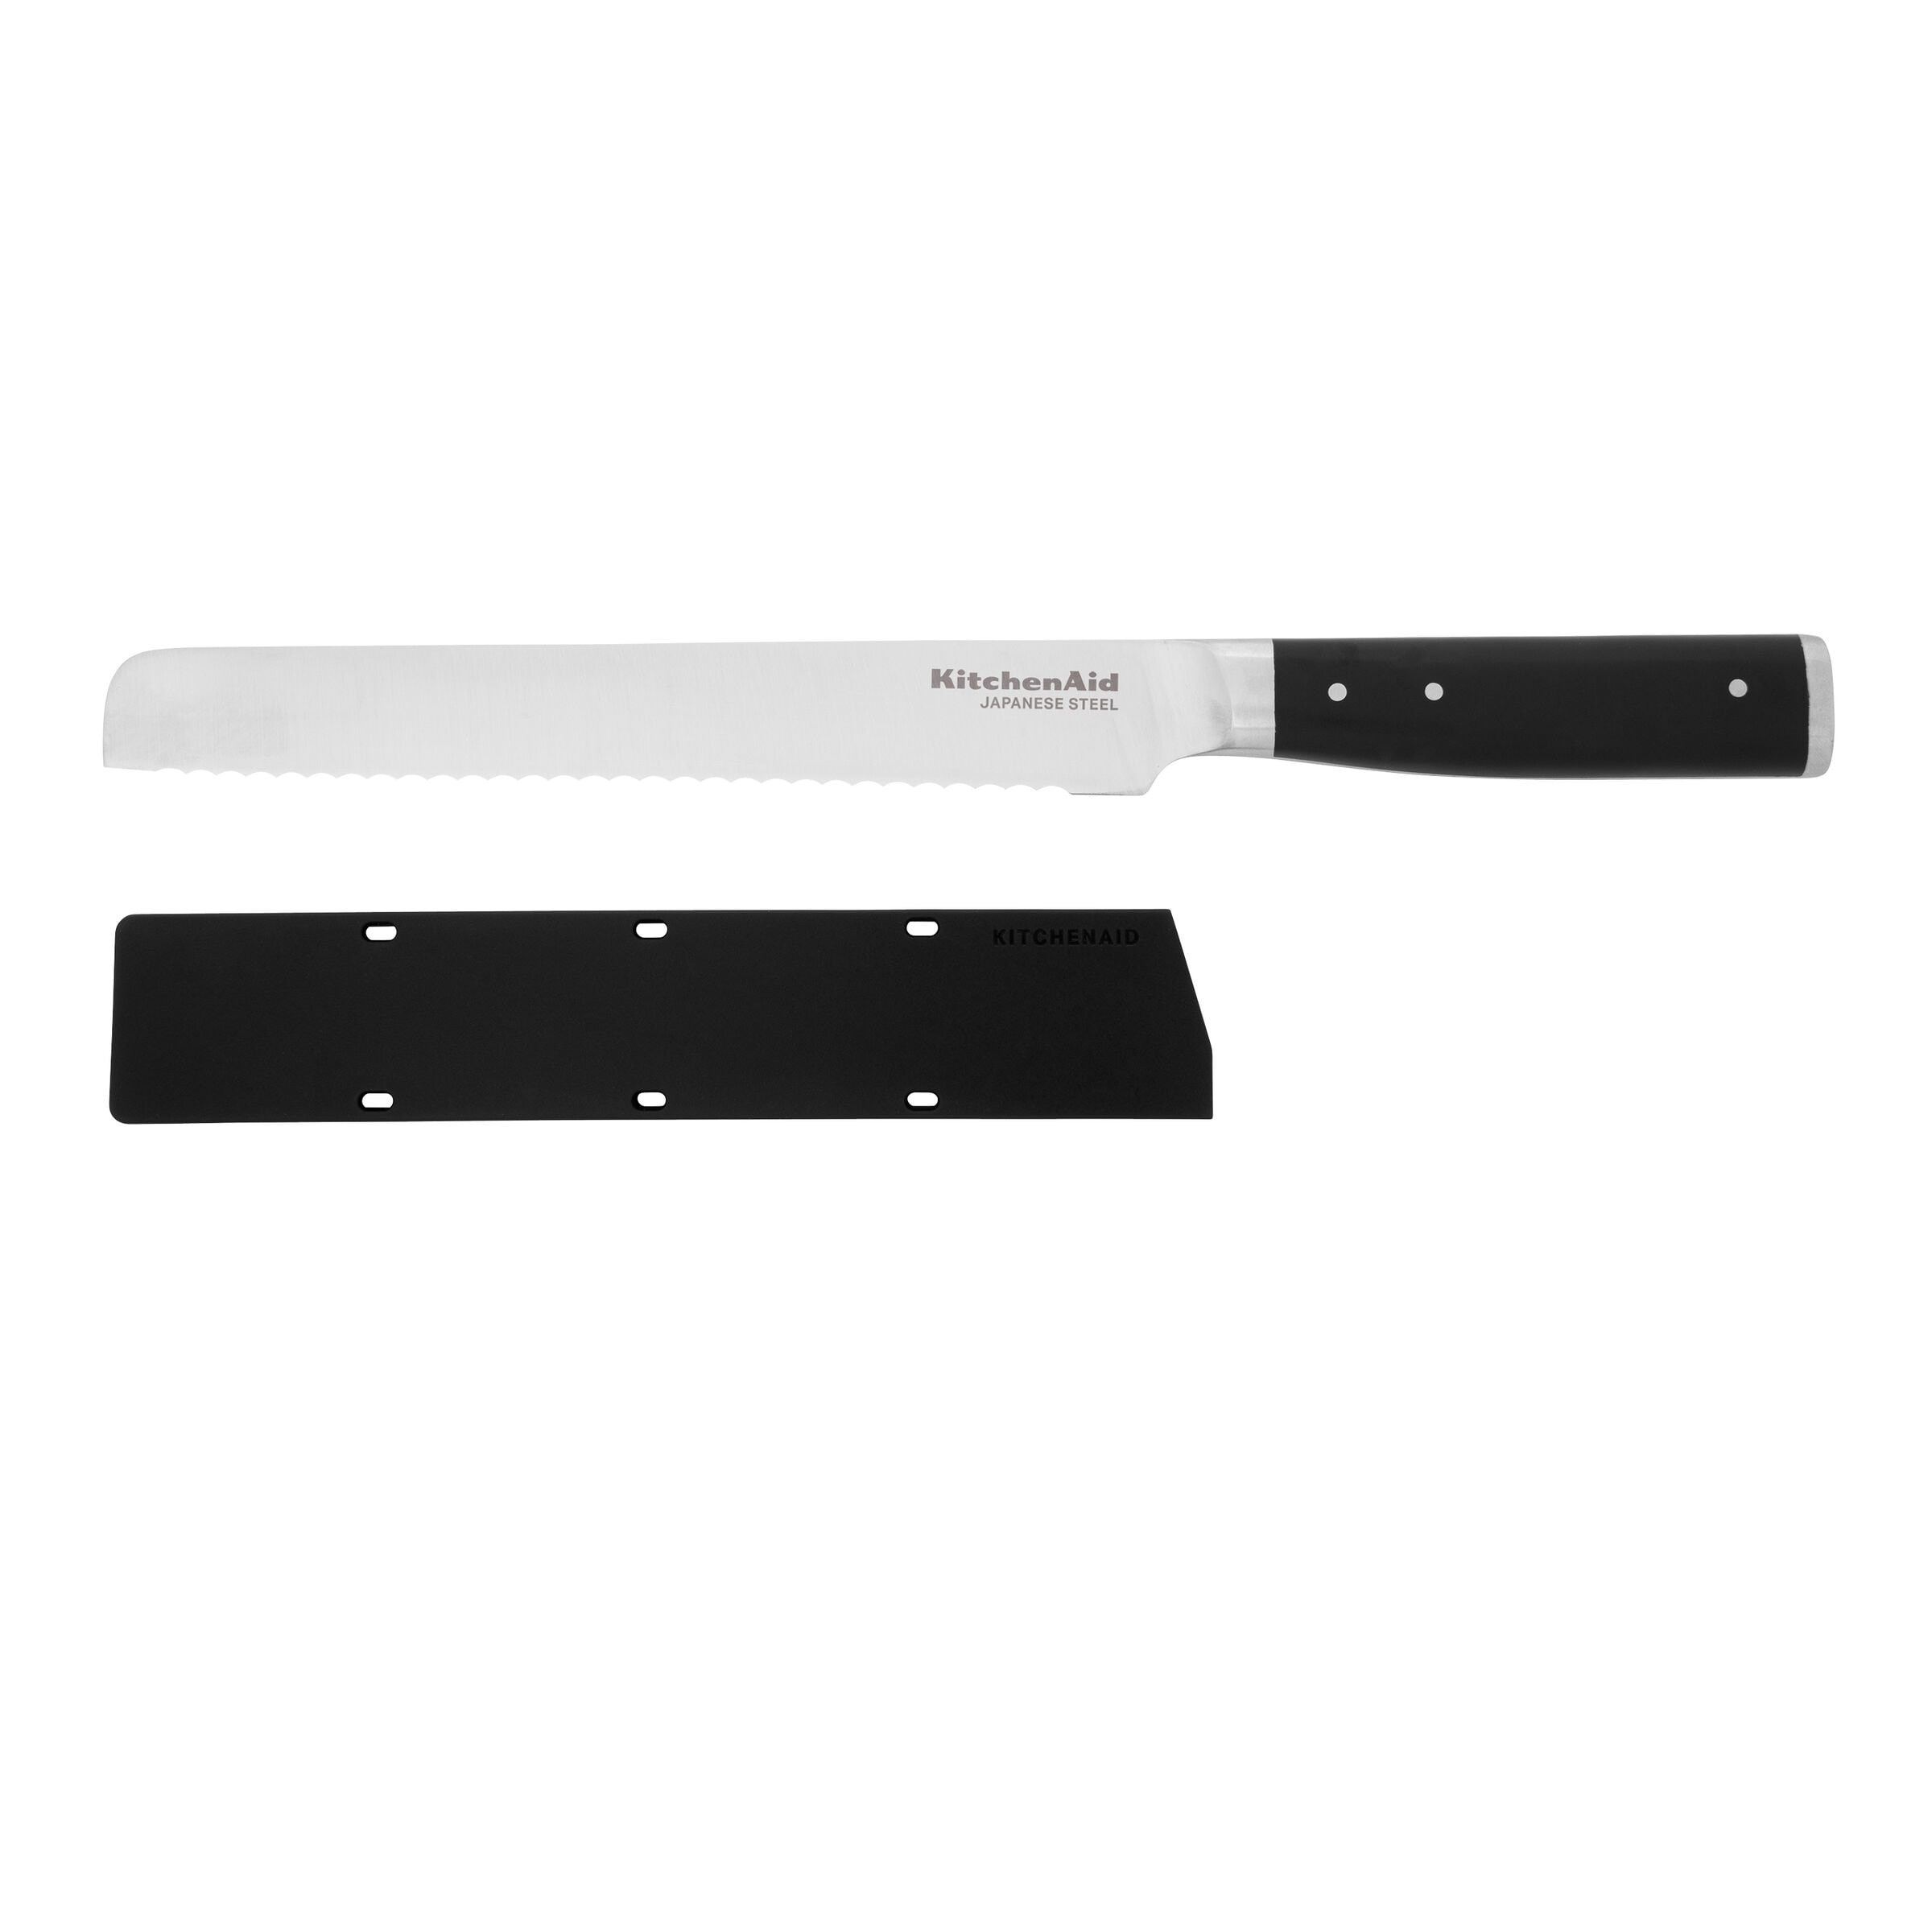 KitchenAid Gourmet Forged Triple-Rivet Utility & Paring Knife Set - 2 Piece